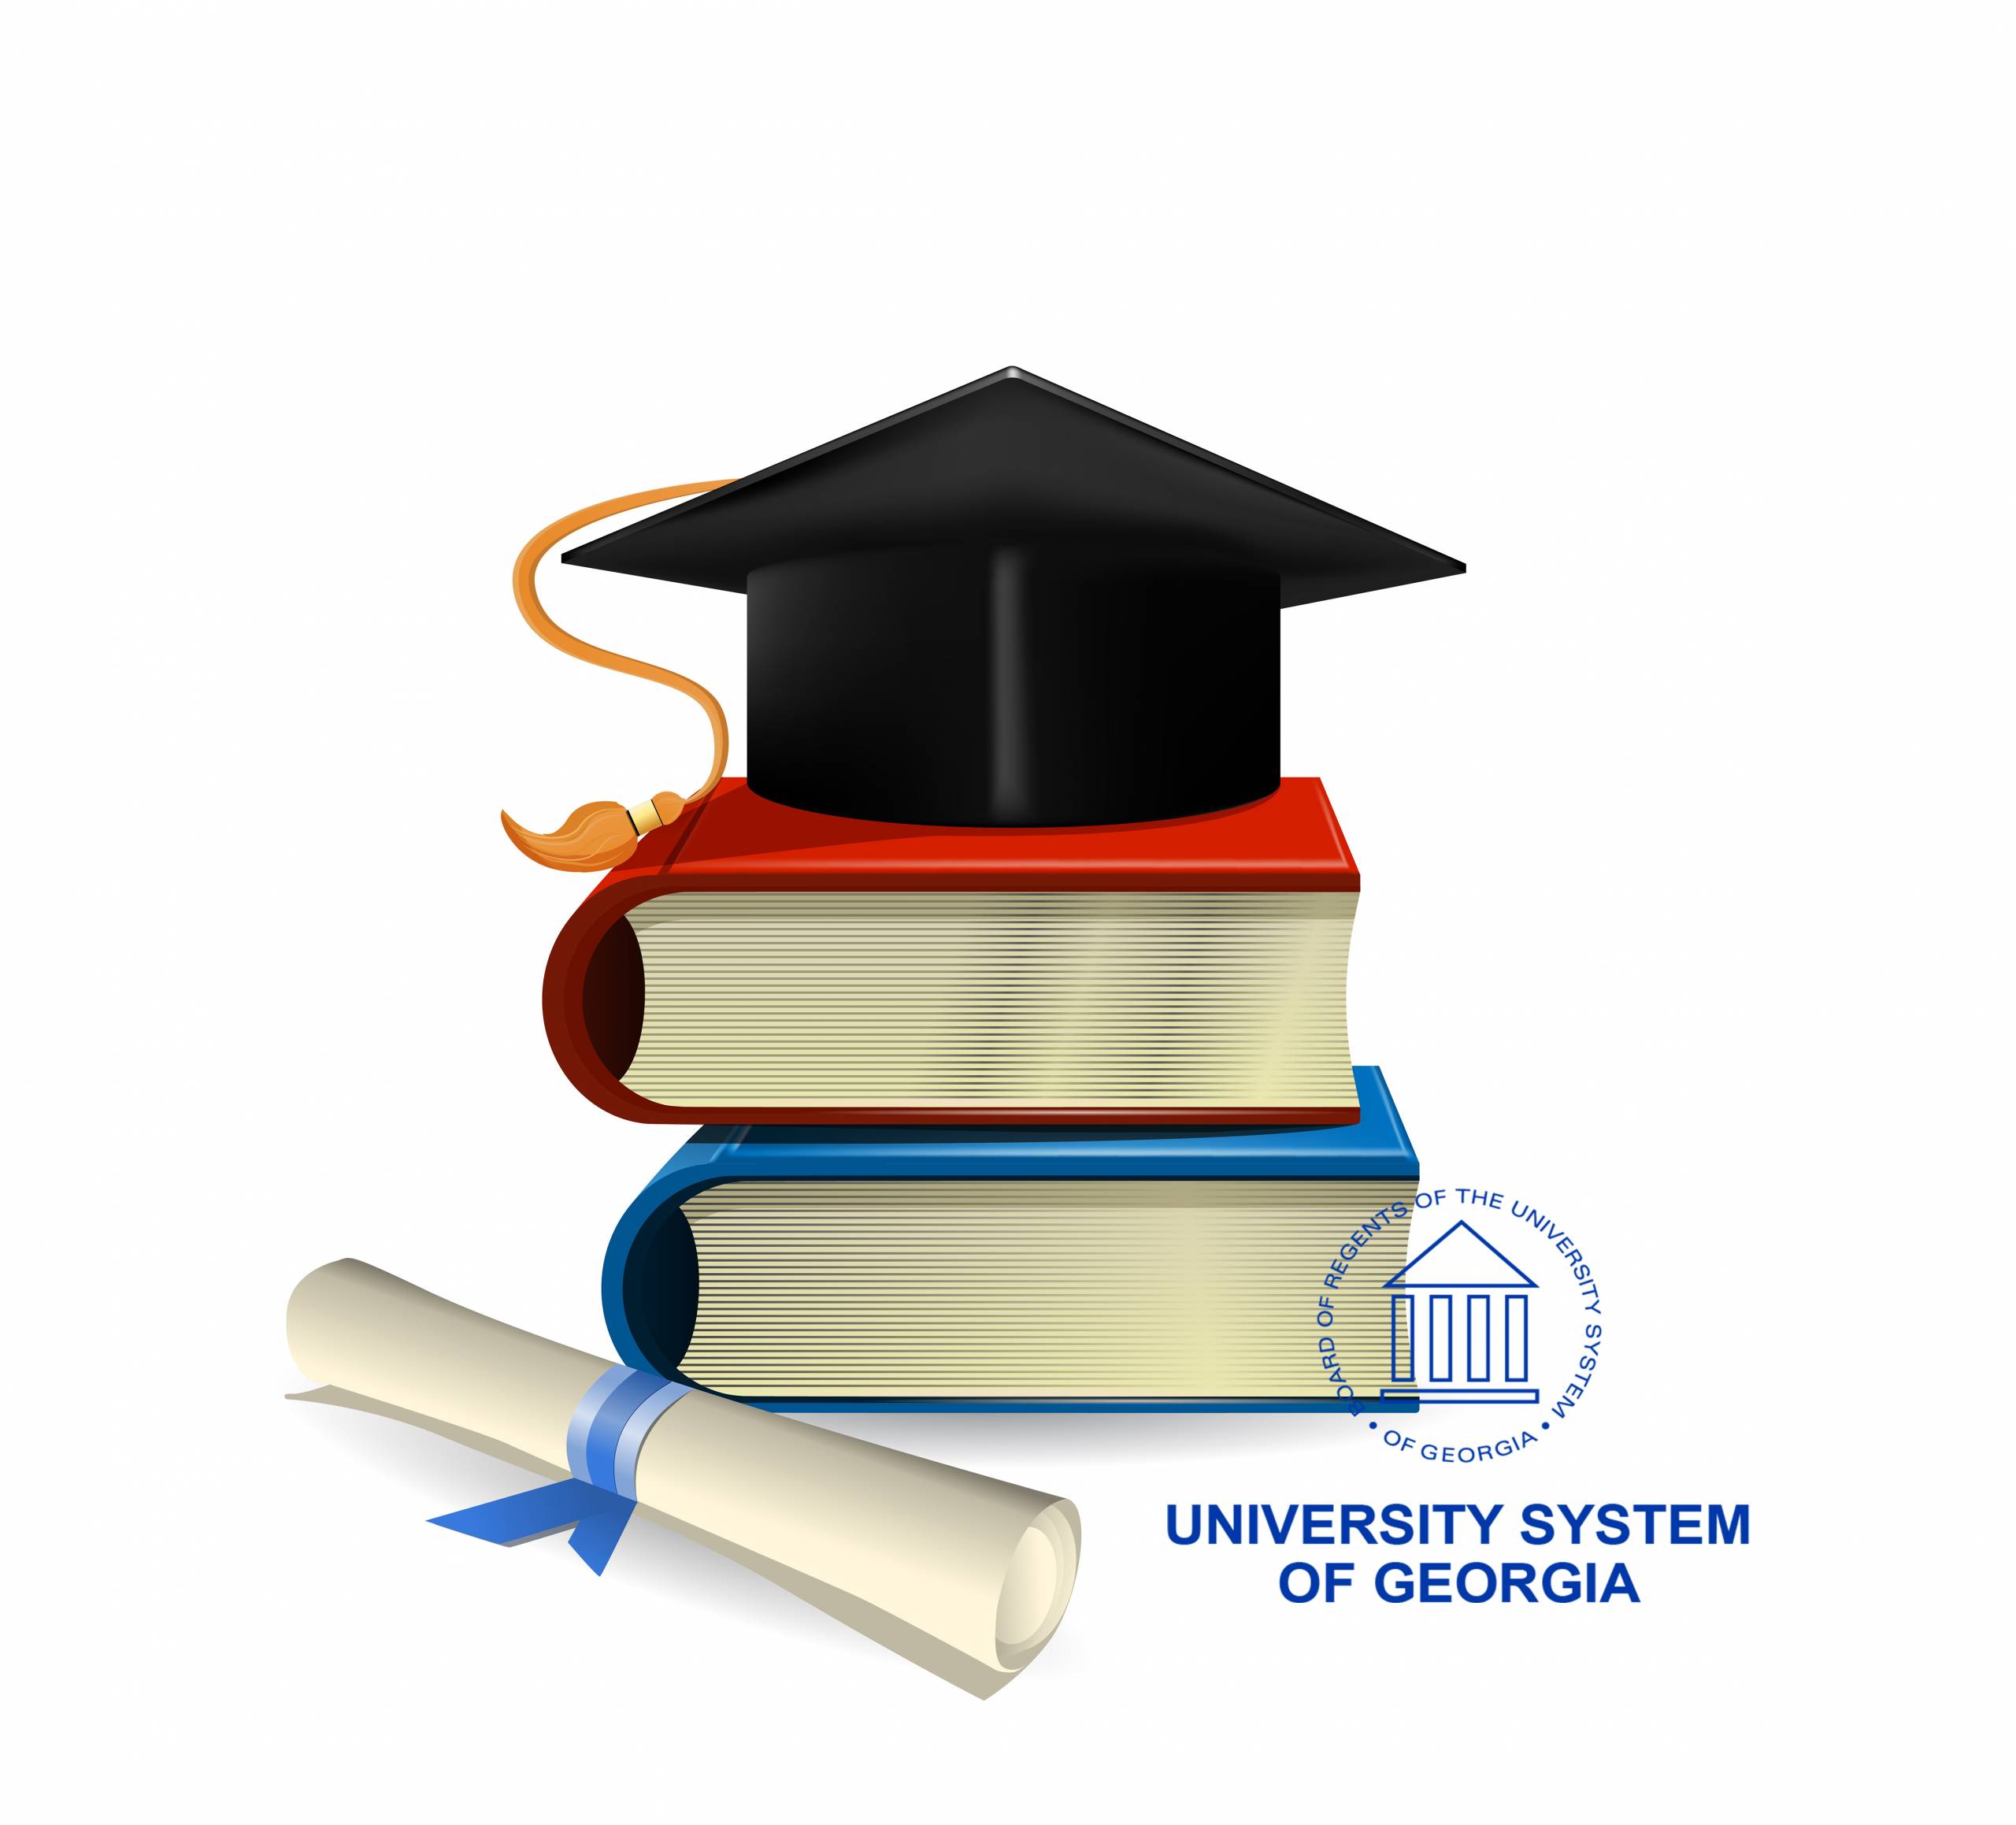 usg Graduation cap, diploma and books